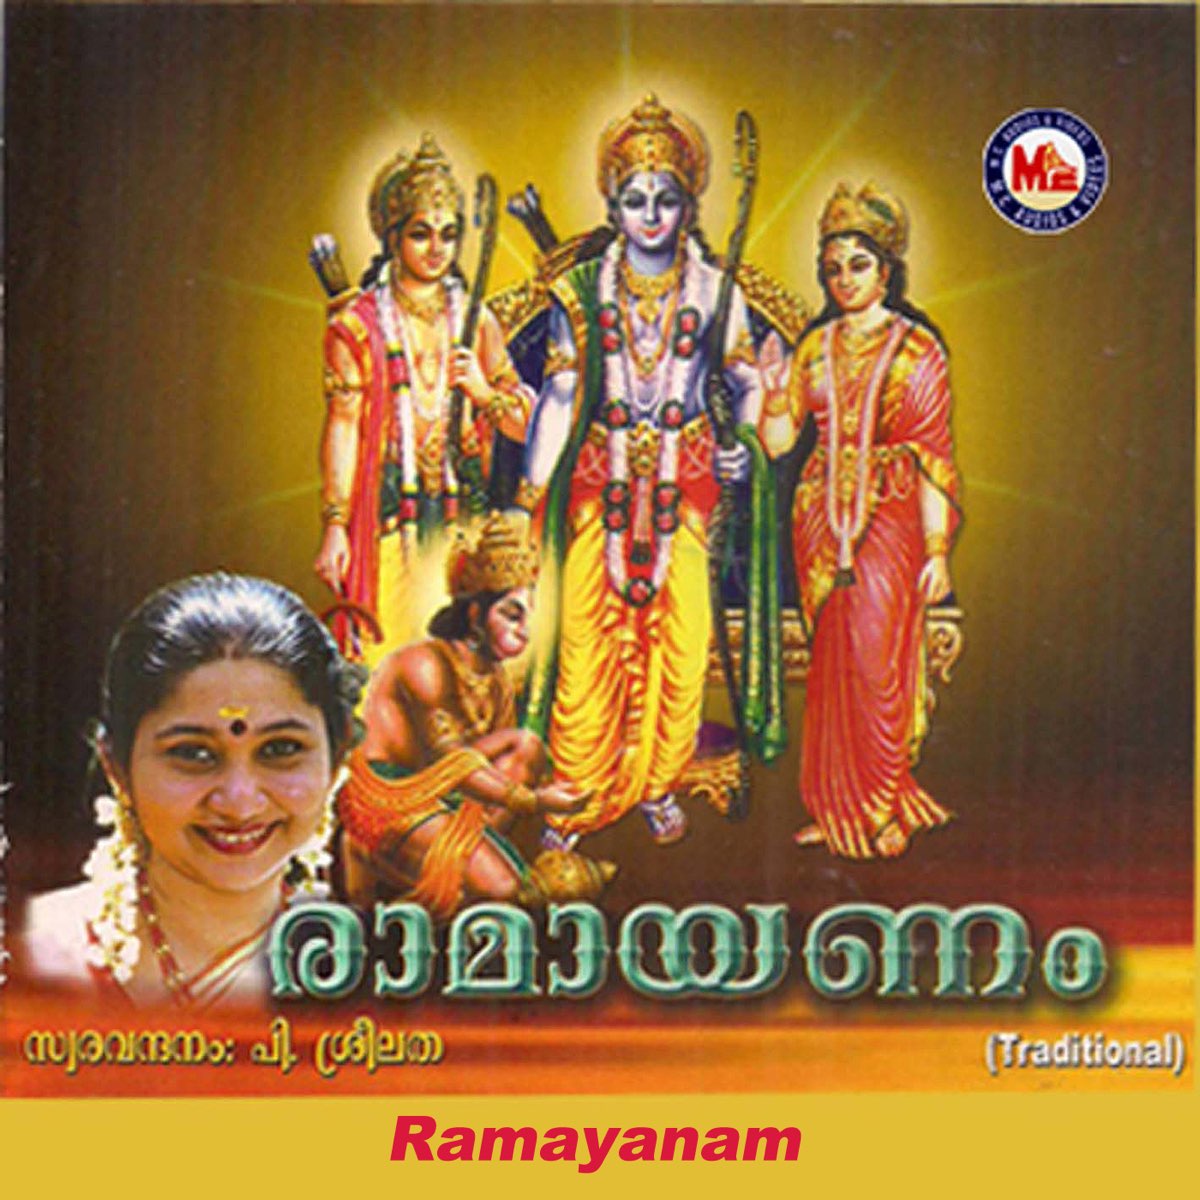 Ramayanam by P. Sreelatha on Apple Music